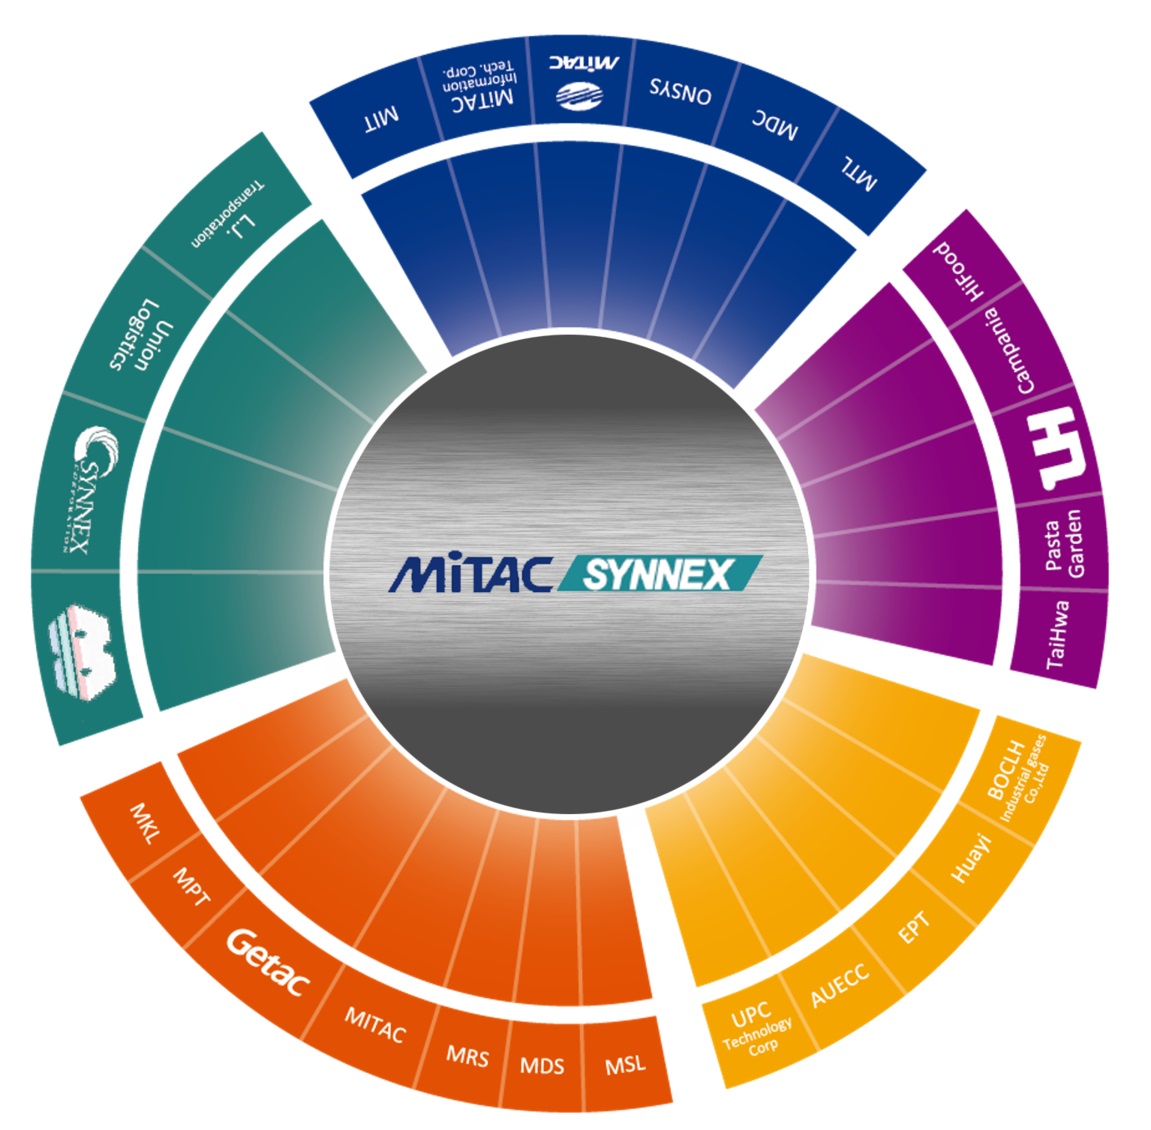 MiTAC-Synnex Group事業群圓圖_S